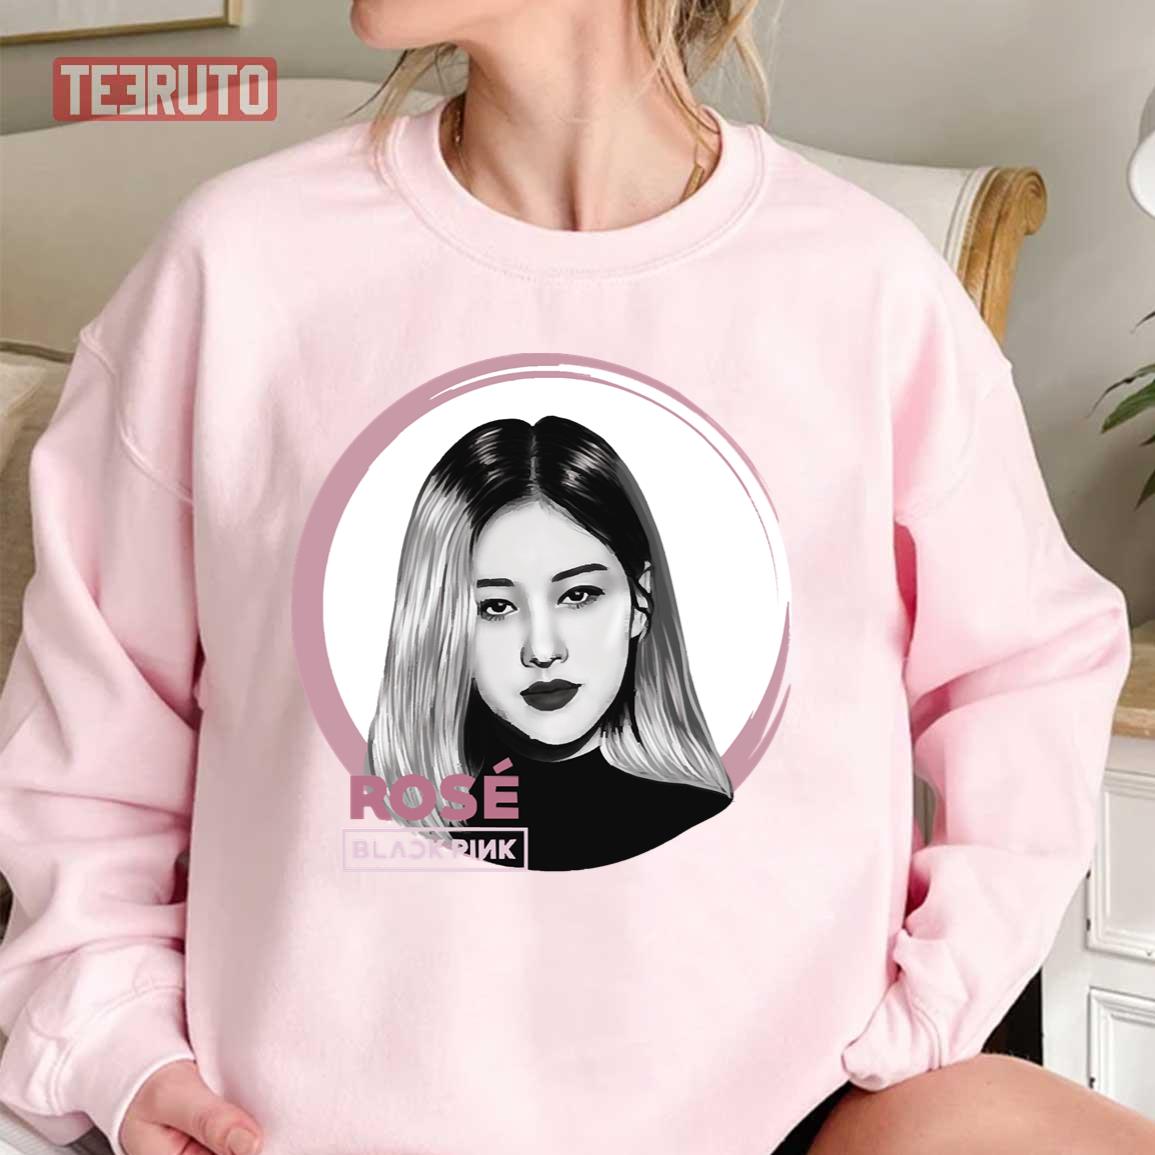 Rosé Black Pink Kpop Girl Unisex Sweatshirt